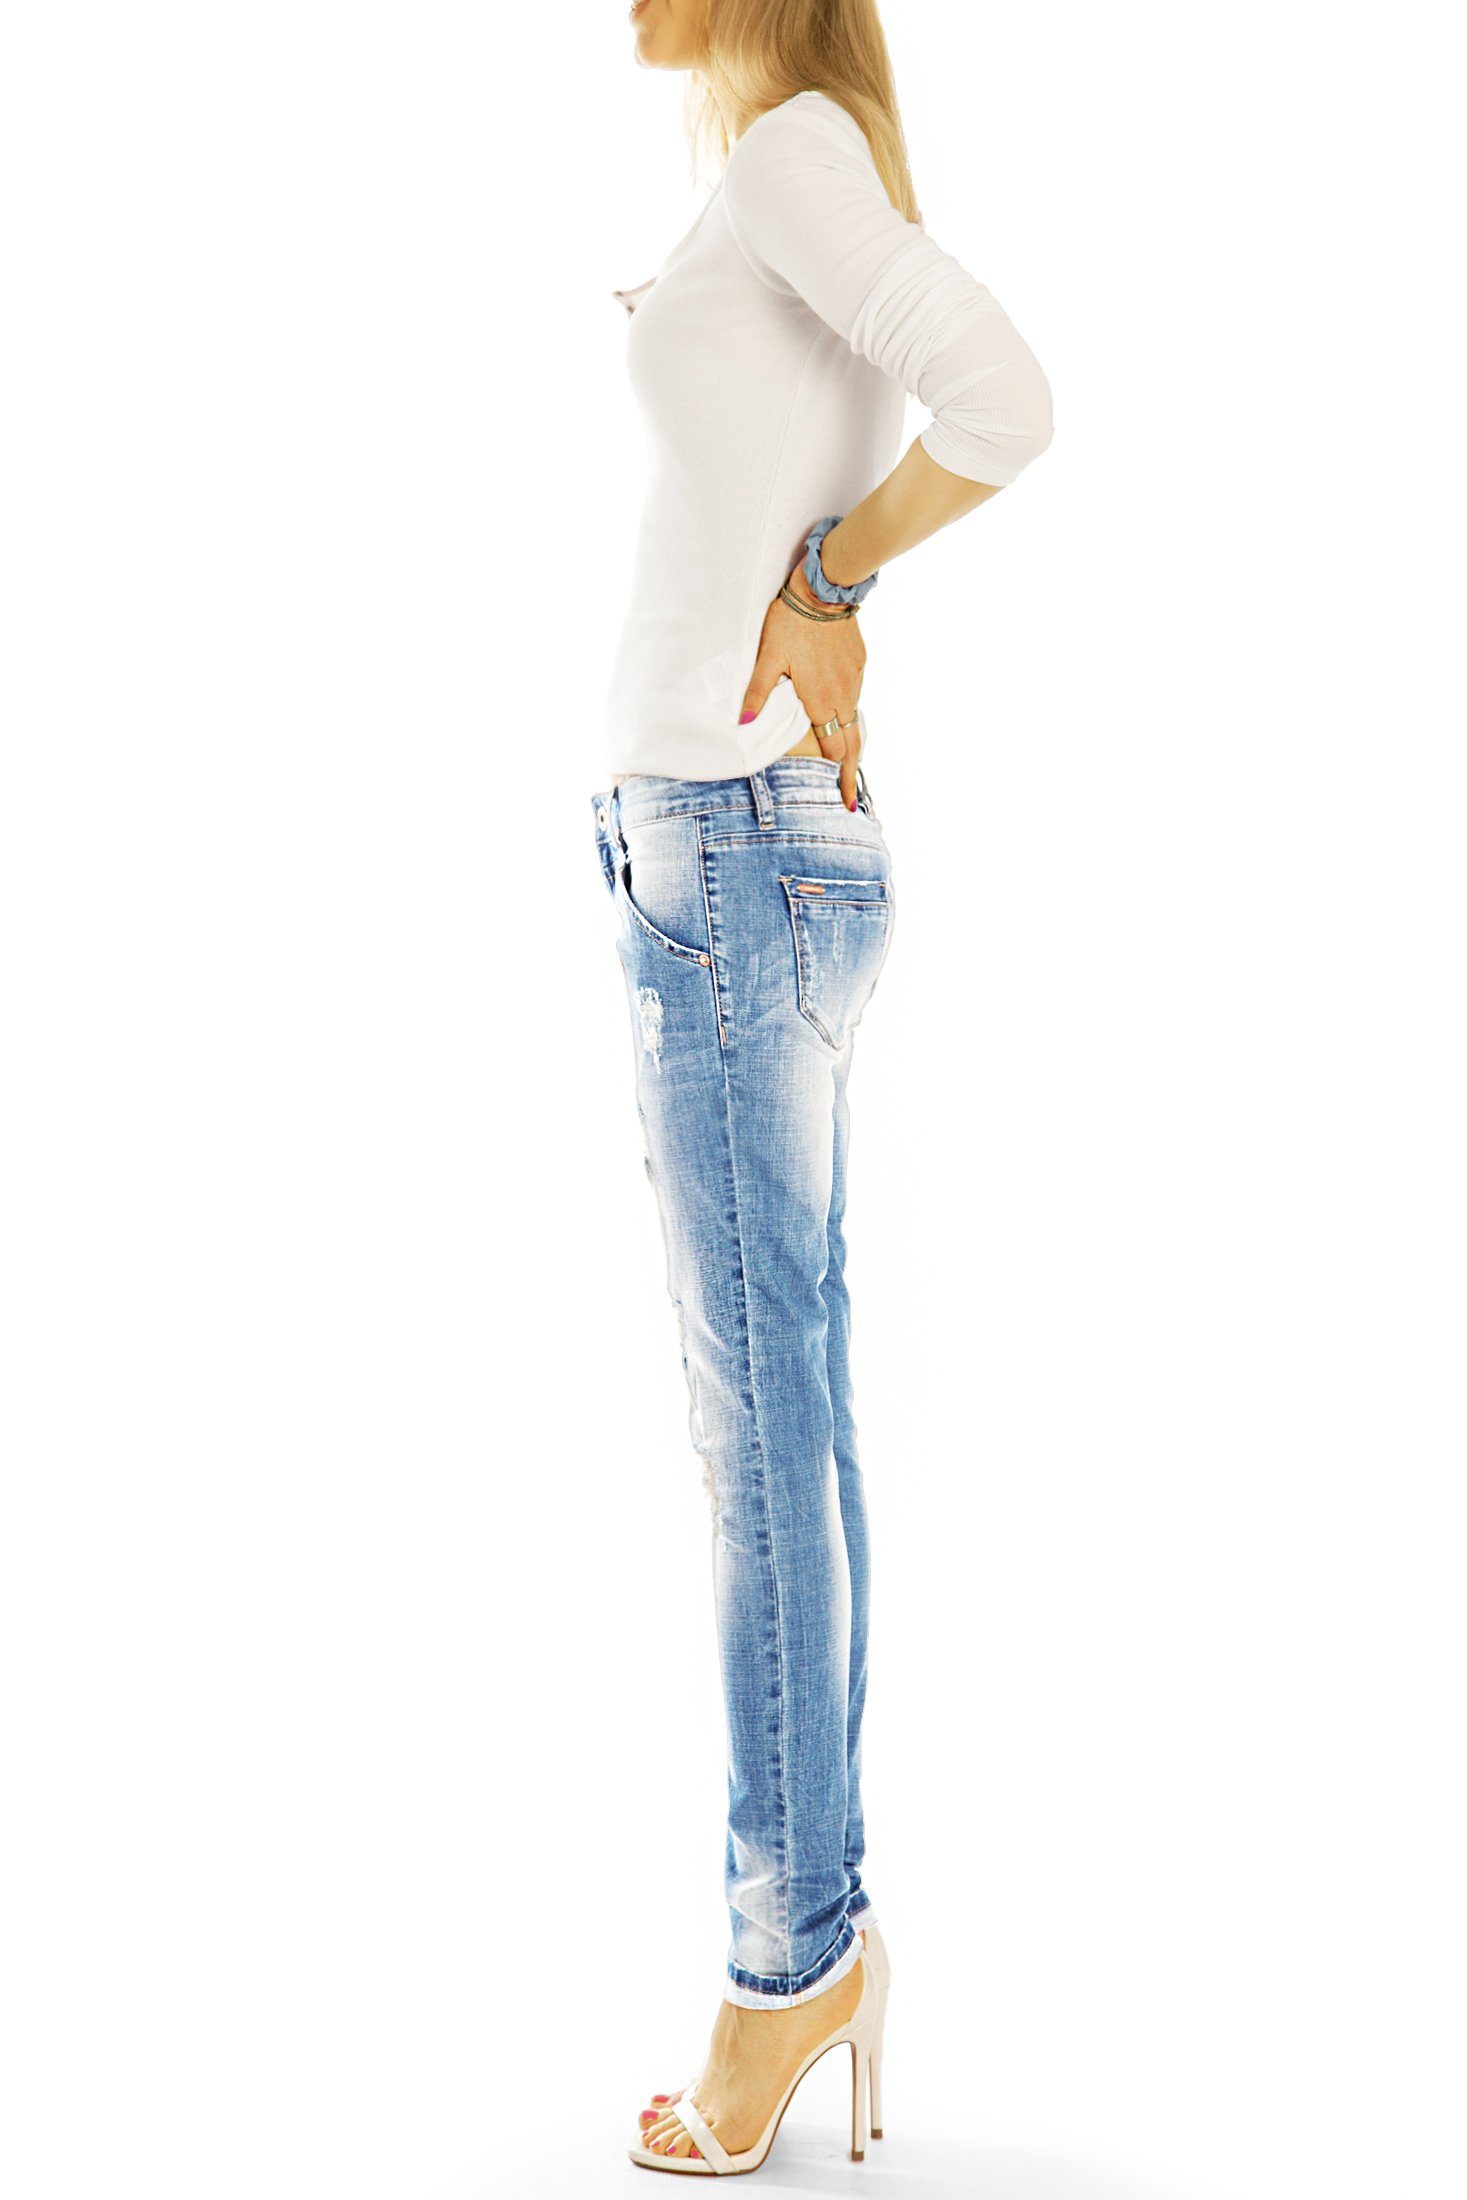 j14k-4 Stretch-Anteil, mit styled be waist Damen low Skinny 5-Pocket-Style Röhrenjeans Slimfit Destroyed-Jeans Hüftjeans Hosen zerissene - Vintage Jeans-